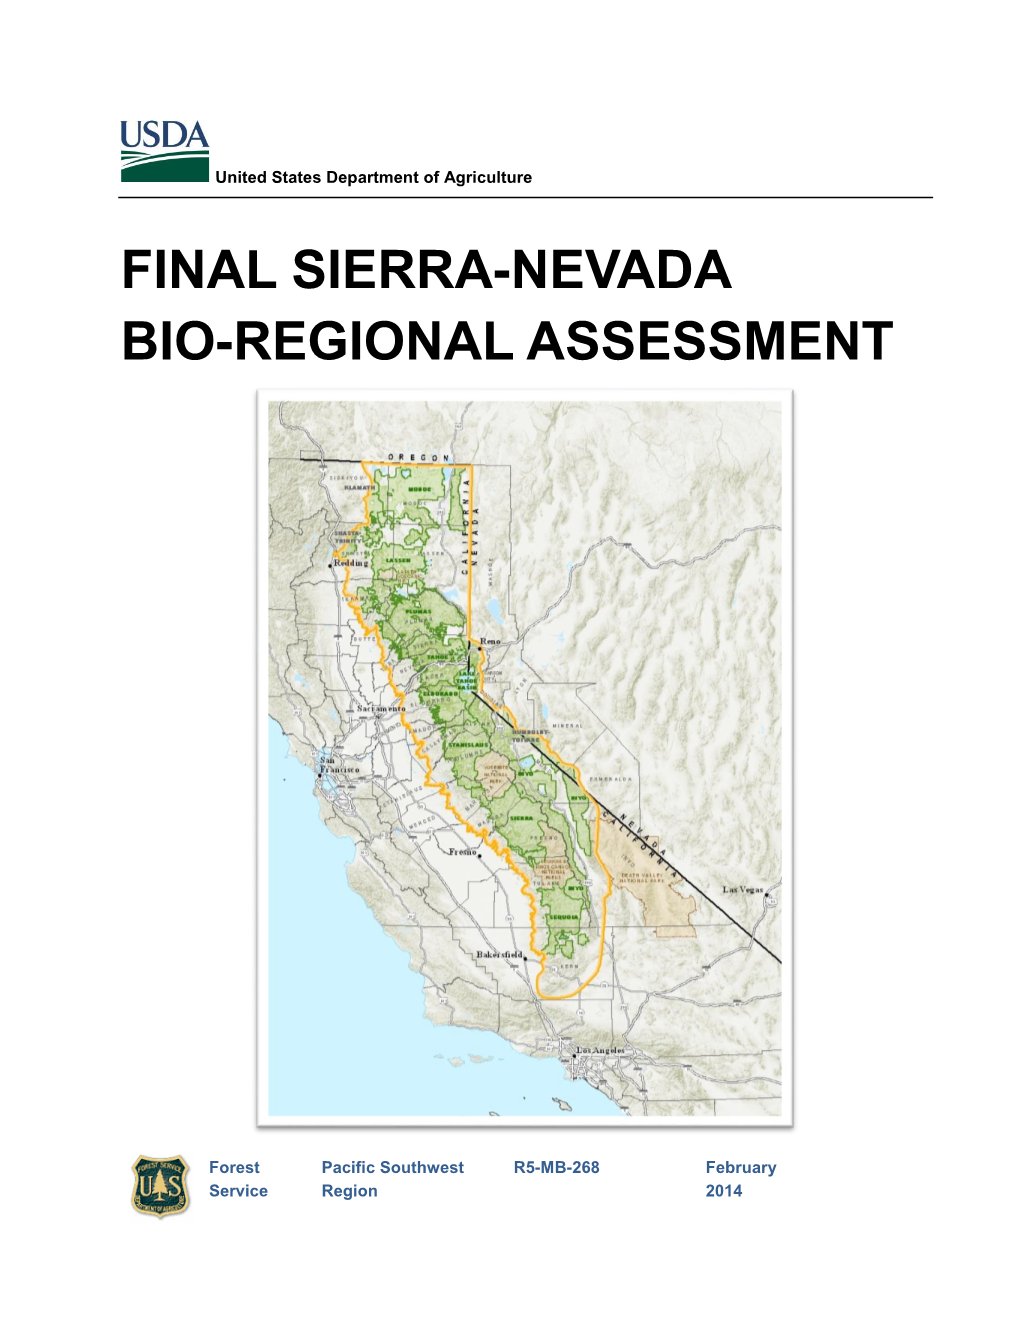 Sierra-Nevada Bio-Regional Assessment